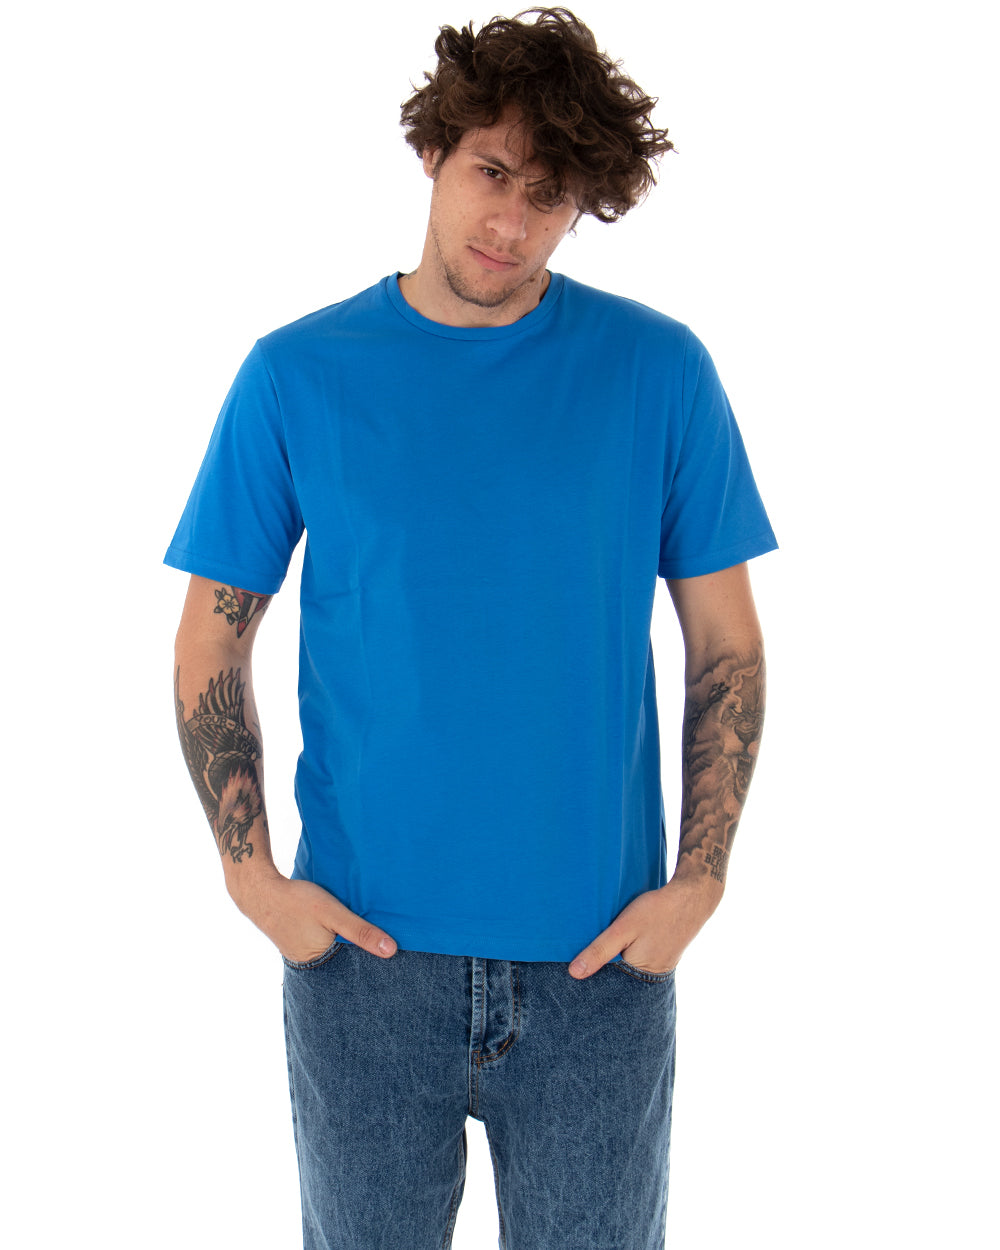 T-shirt Uomo Maniche Corte Tinta Unita Blu Royal Casual Girocollo GIOSAL-TS2513A